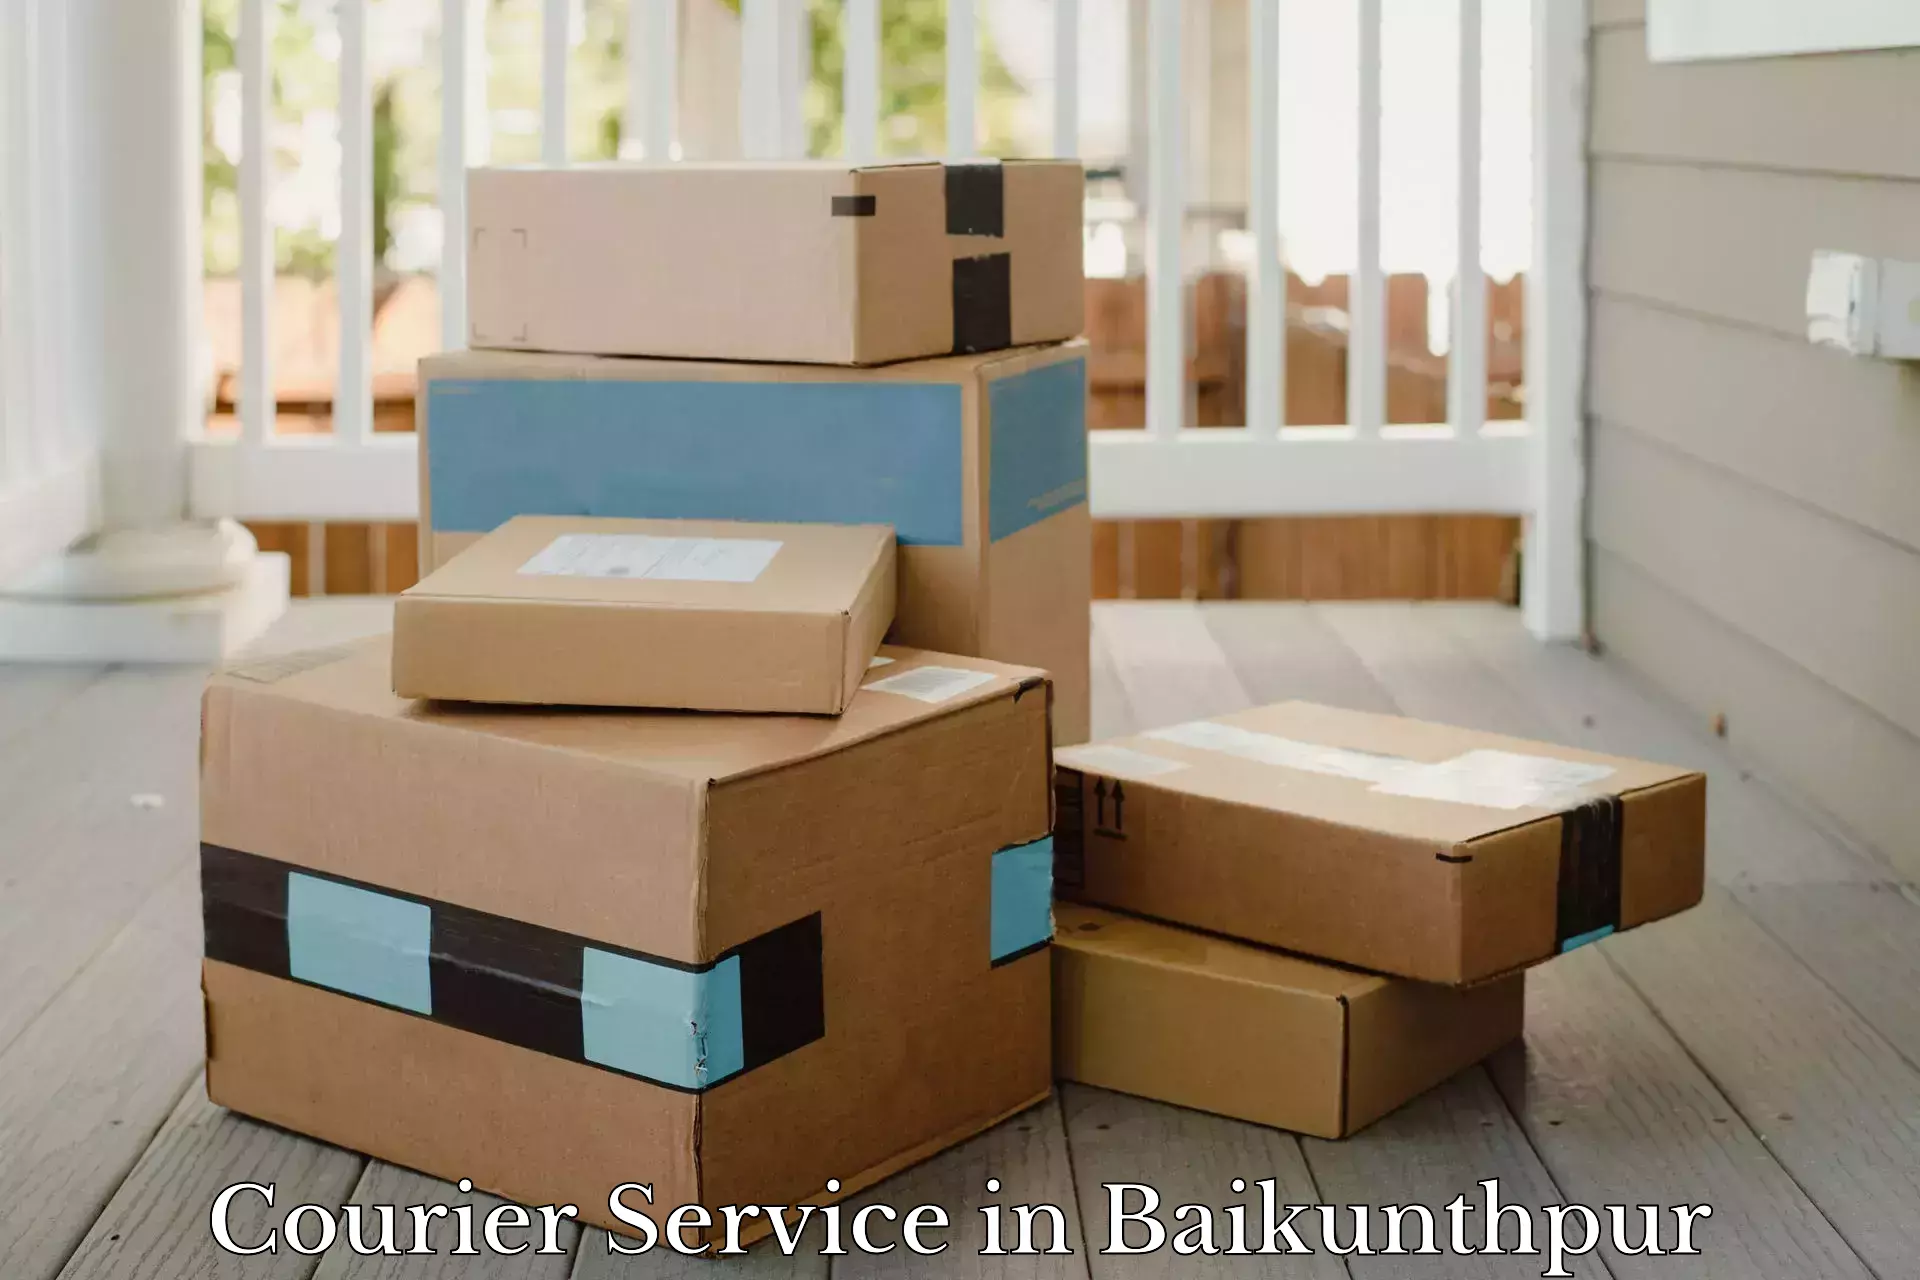 High-capacity shipping options in Baikunthpur